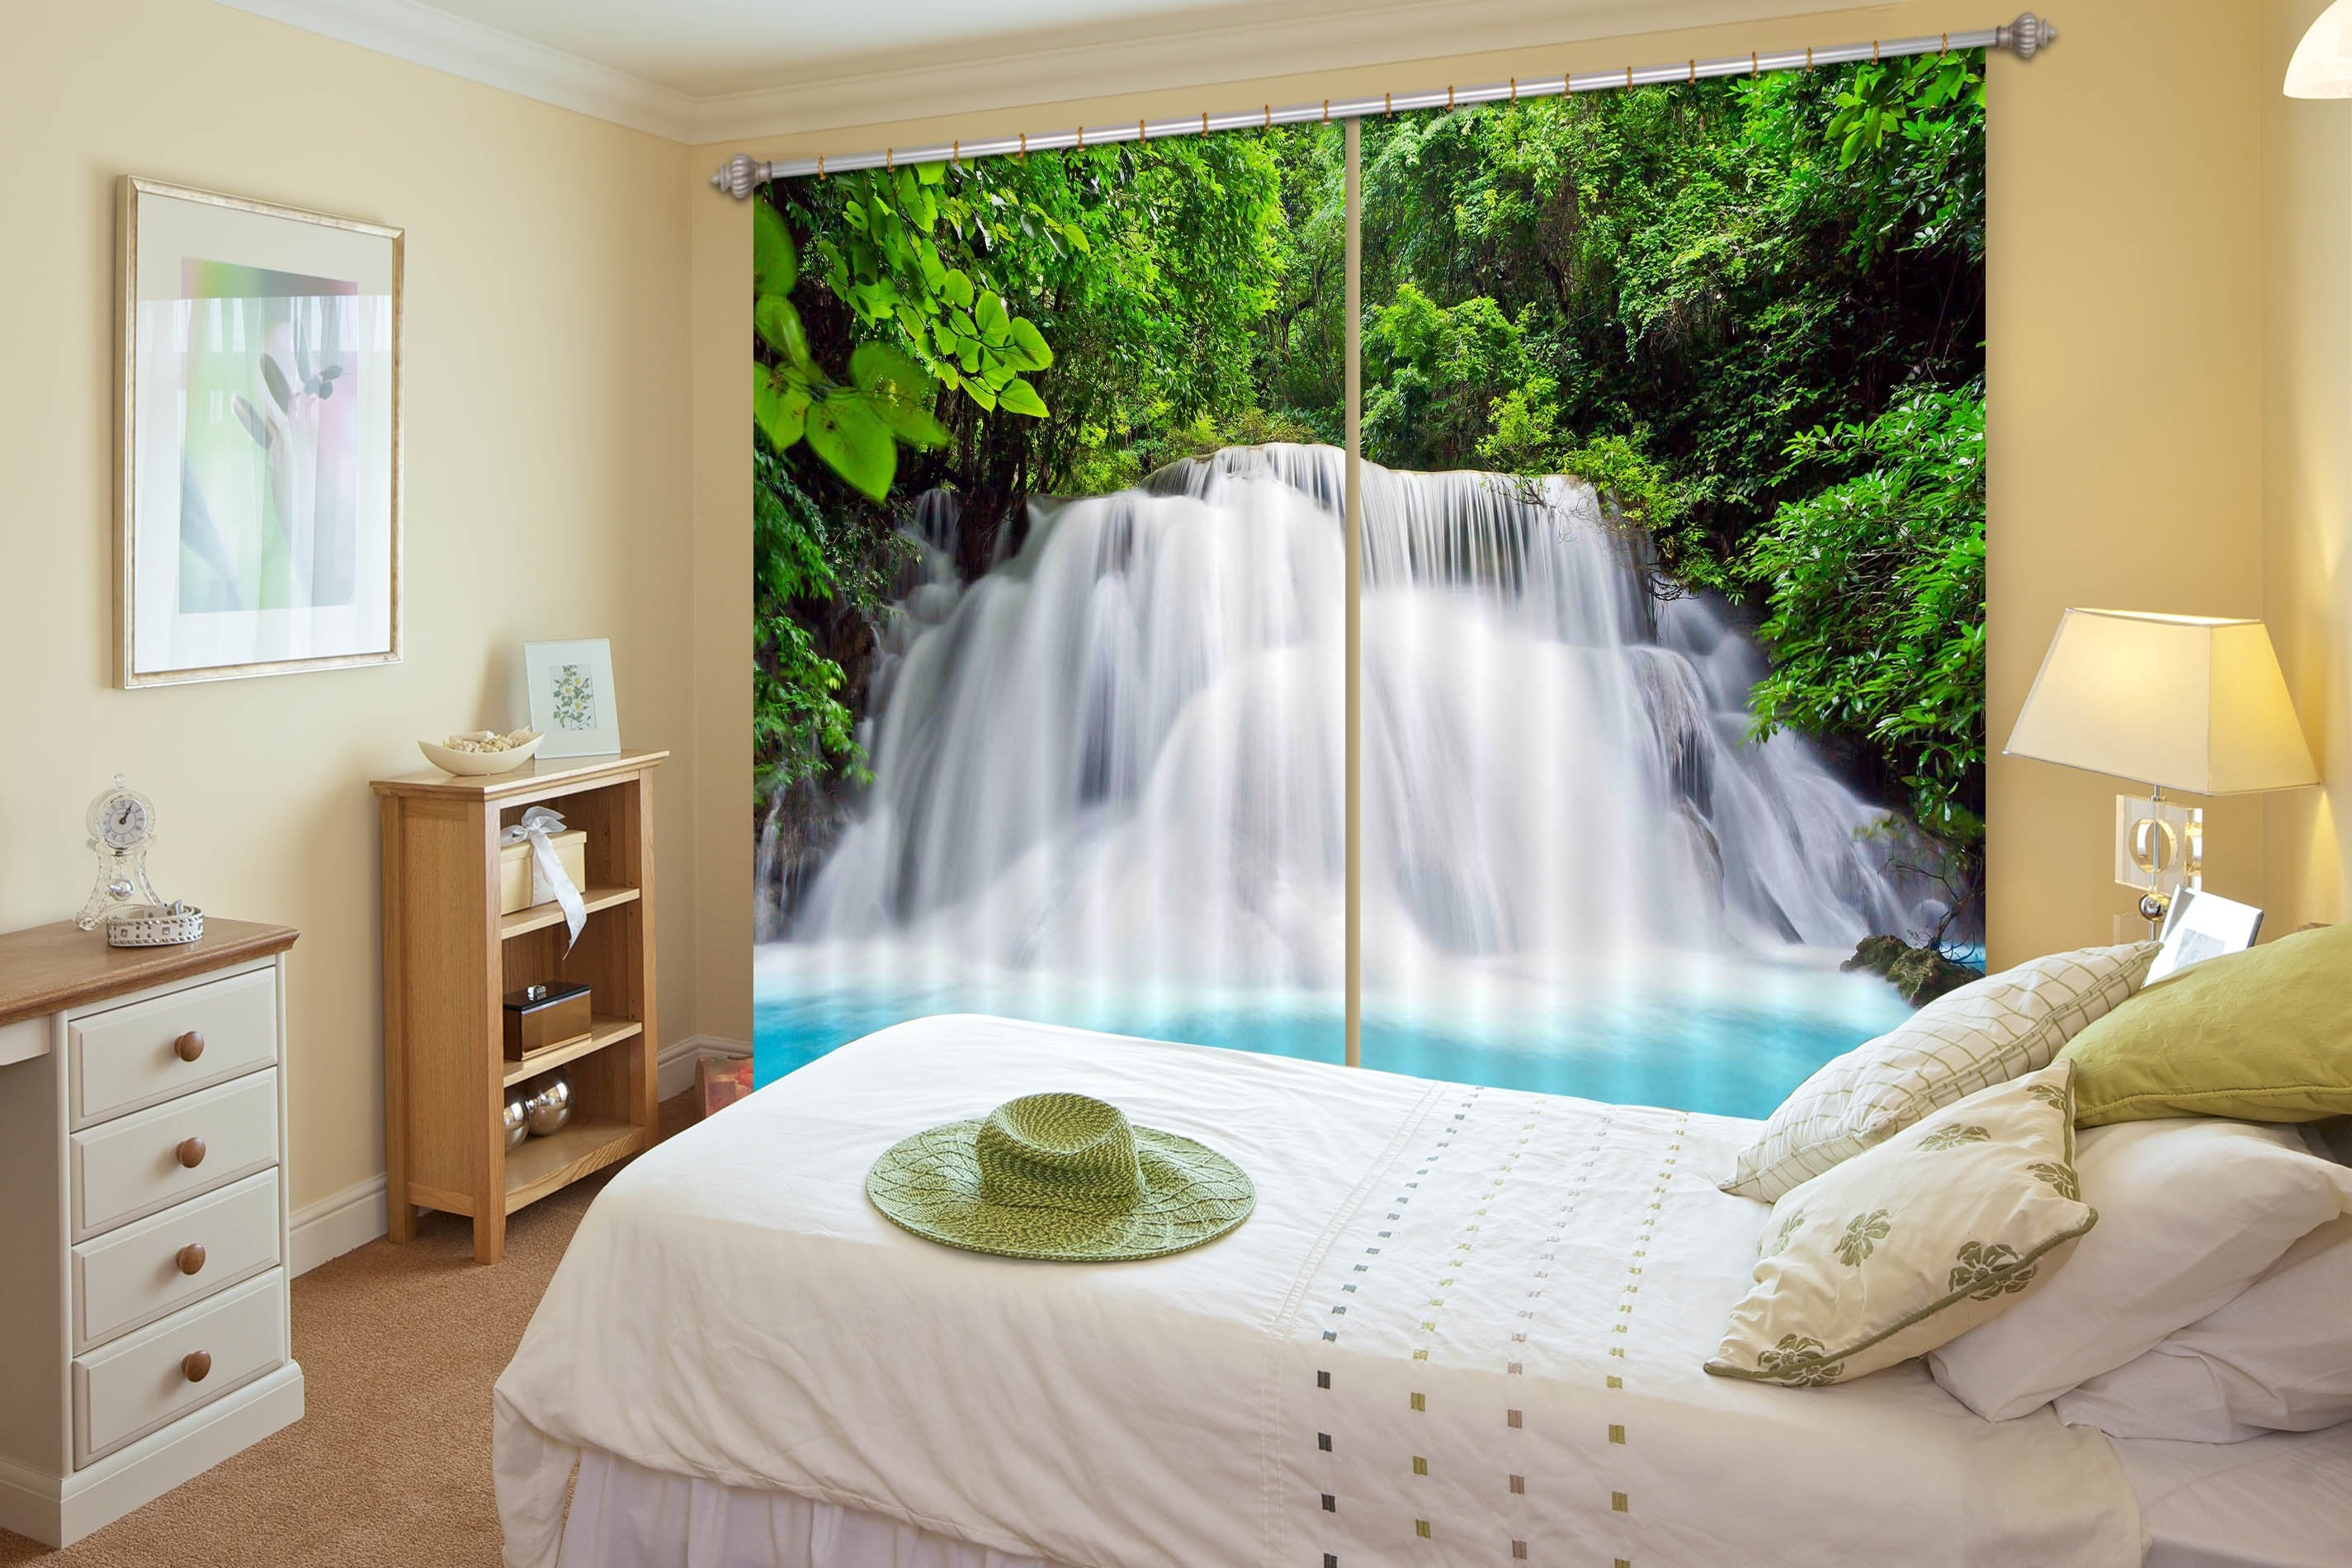 3D Big Waterfall 828 Curtains Drapes Wallpaper AJ Wallpaper 